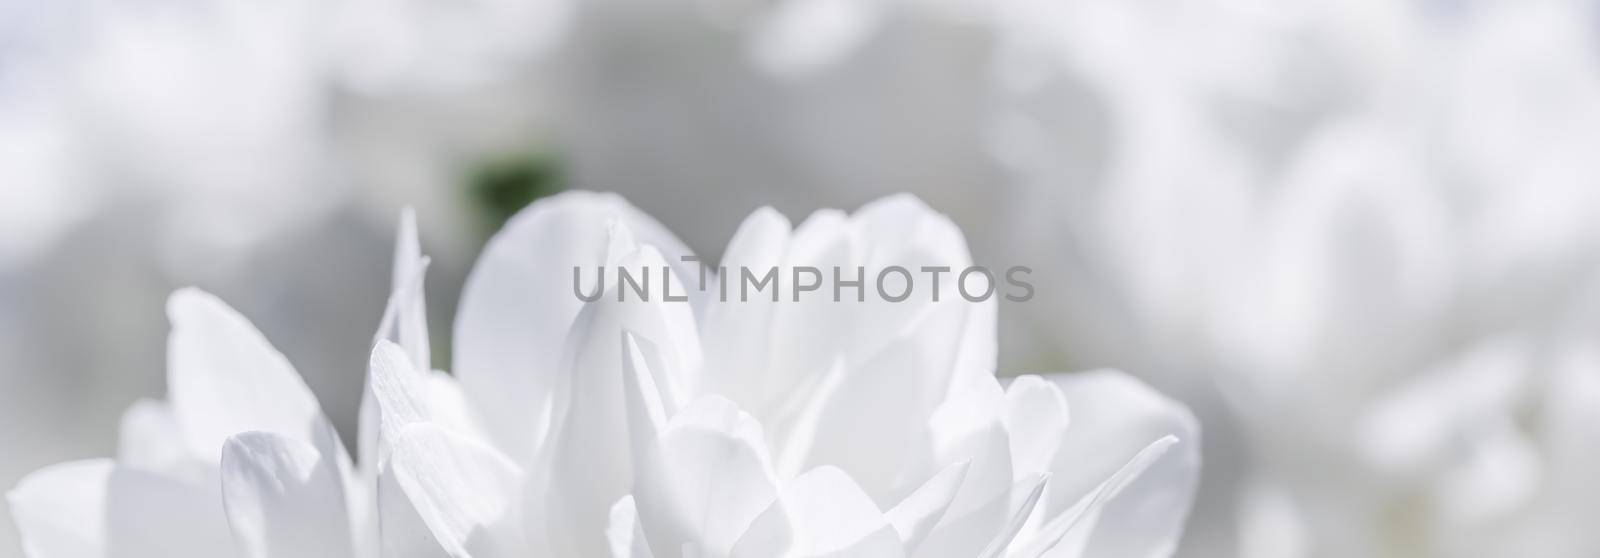 White terry jasmine flowers in the garden. Floral background